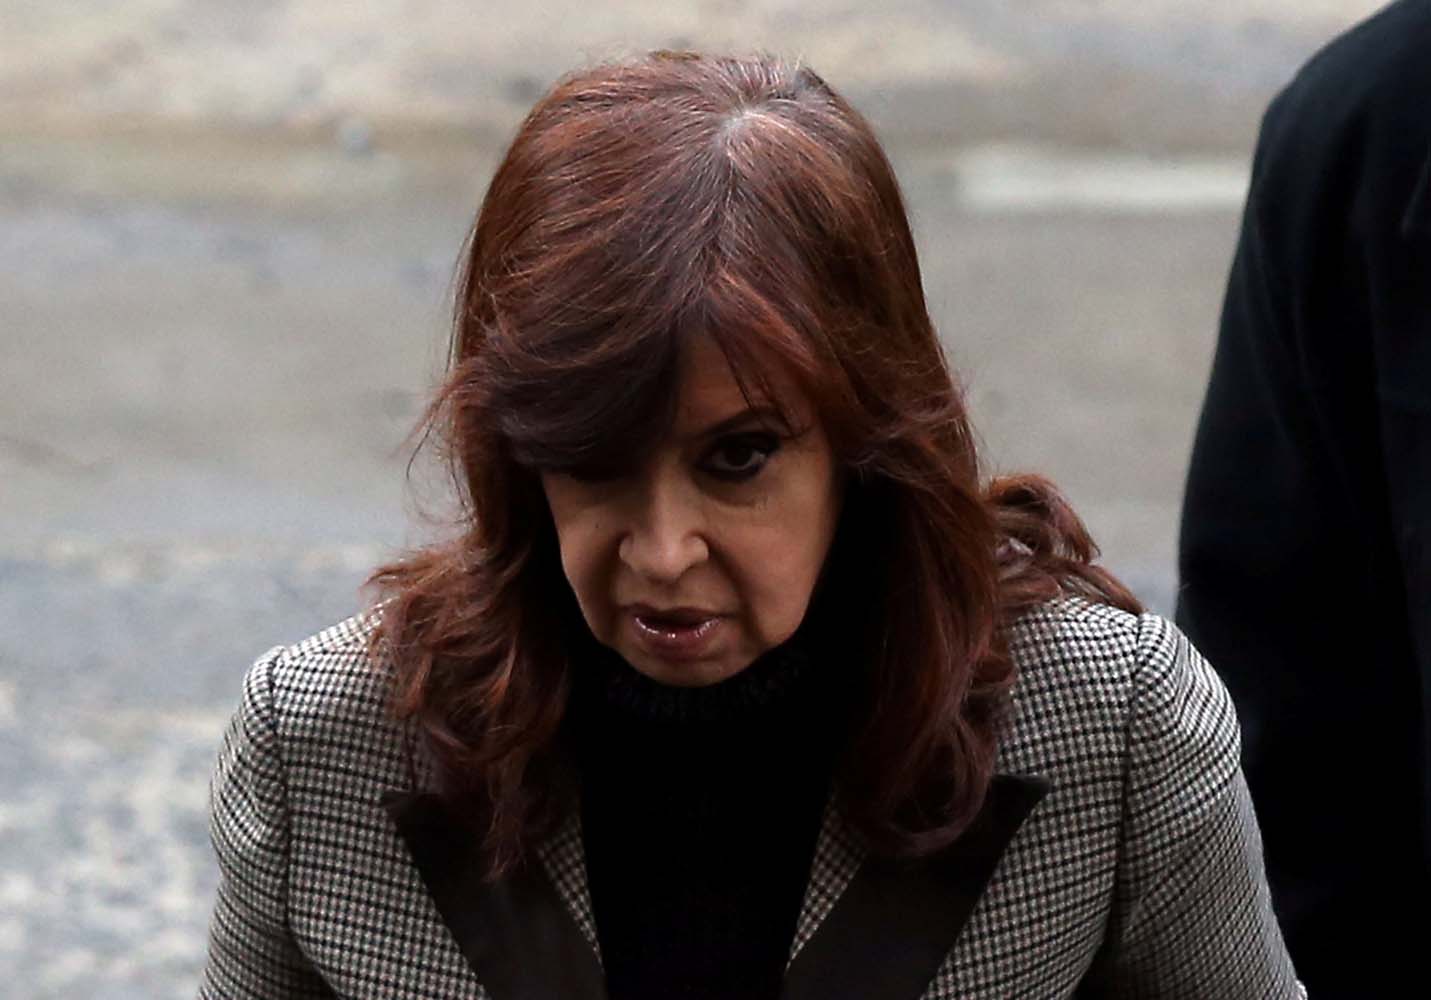 Confirman procesamiento con prisión a Cristina Fernández en caso de sobornos